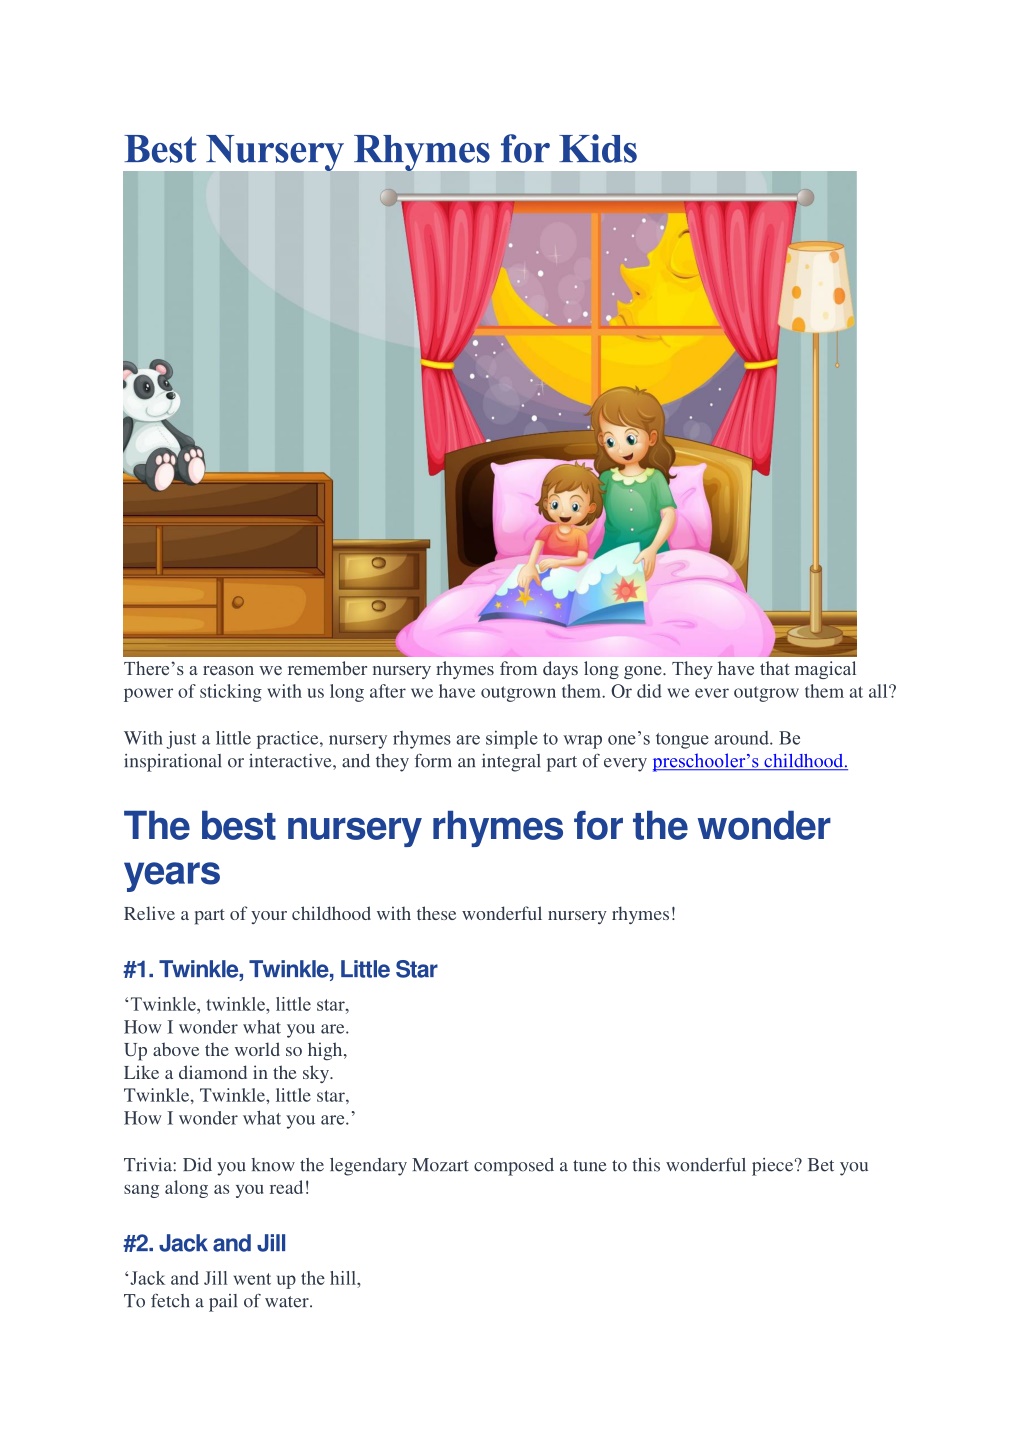 The Moo, Moo Song, Children's Nursery Rhyme